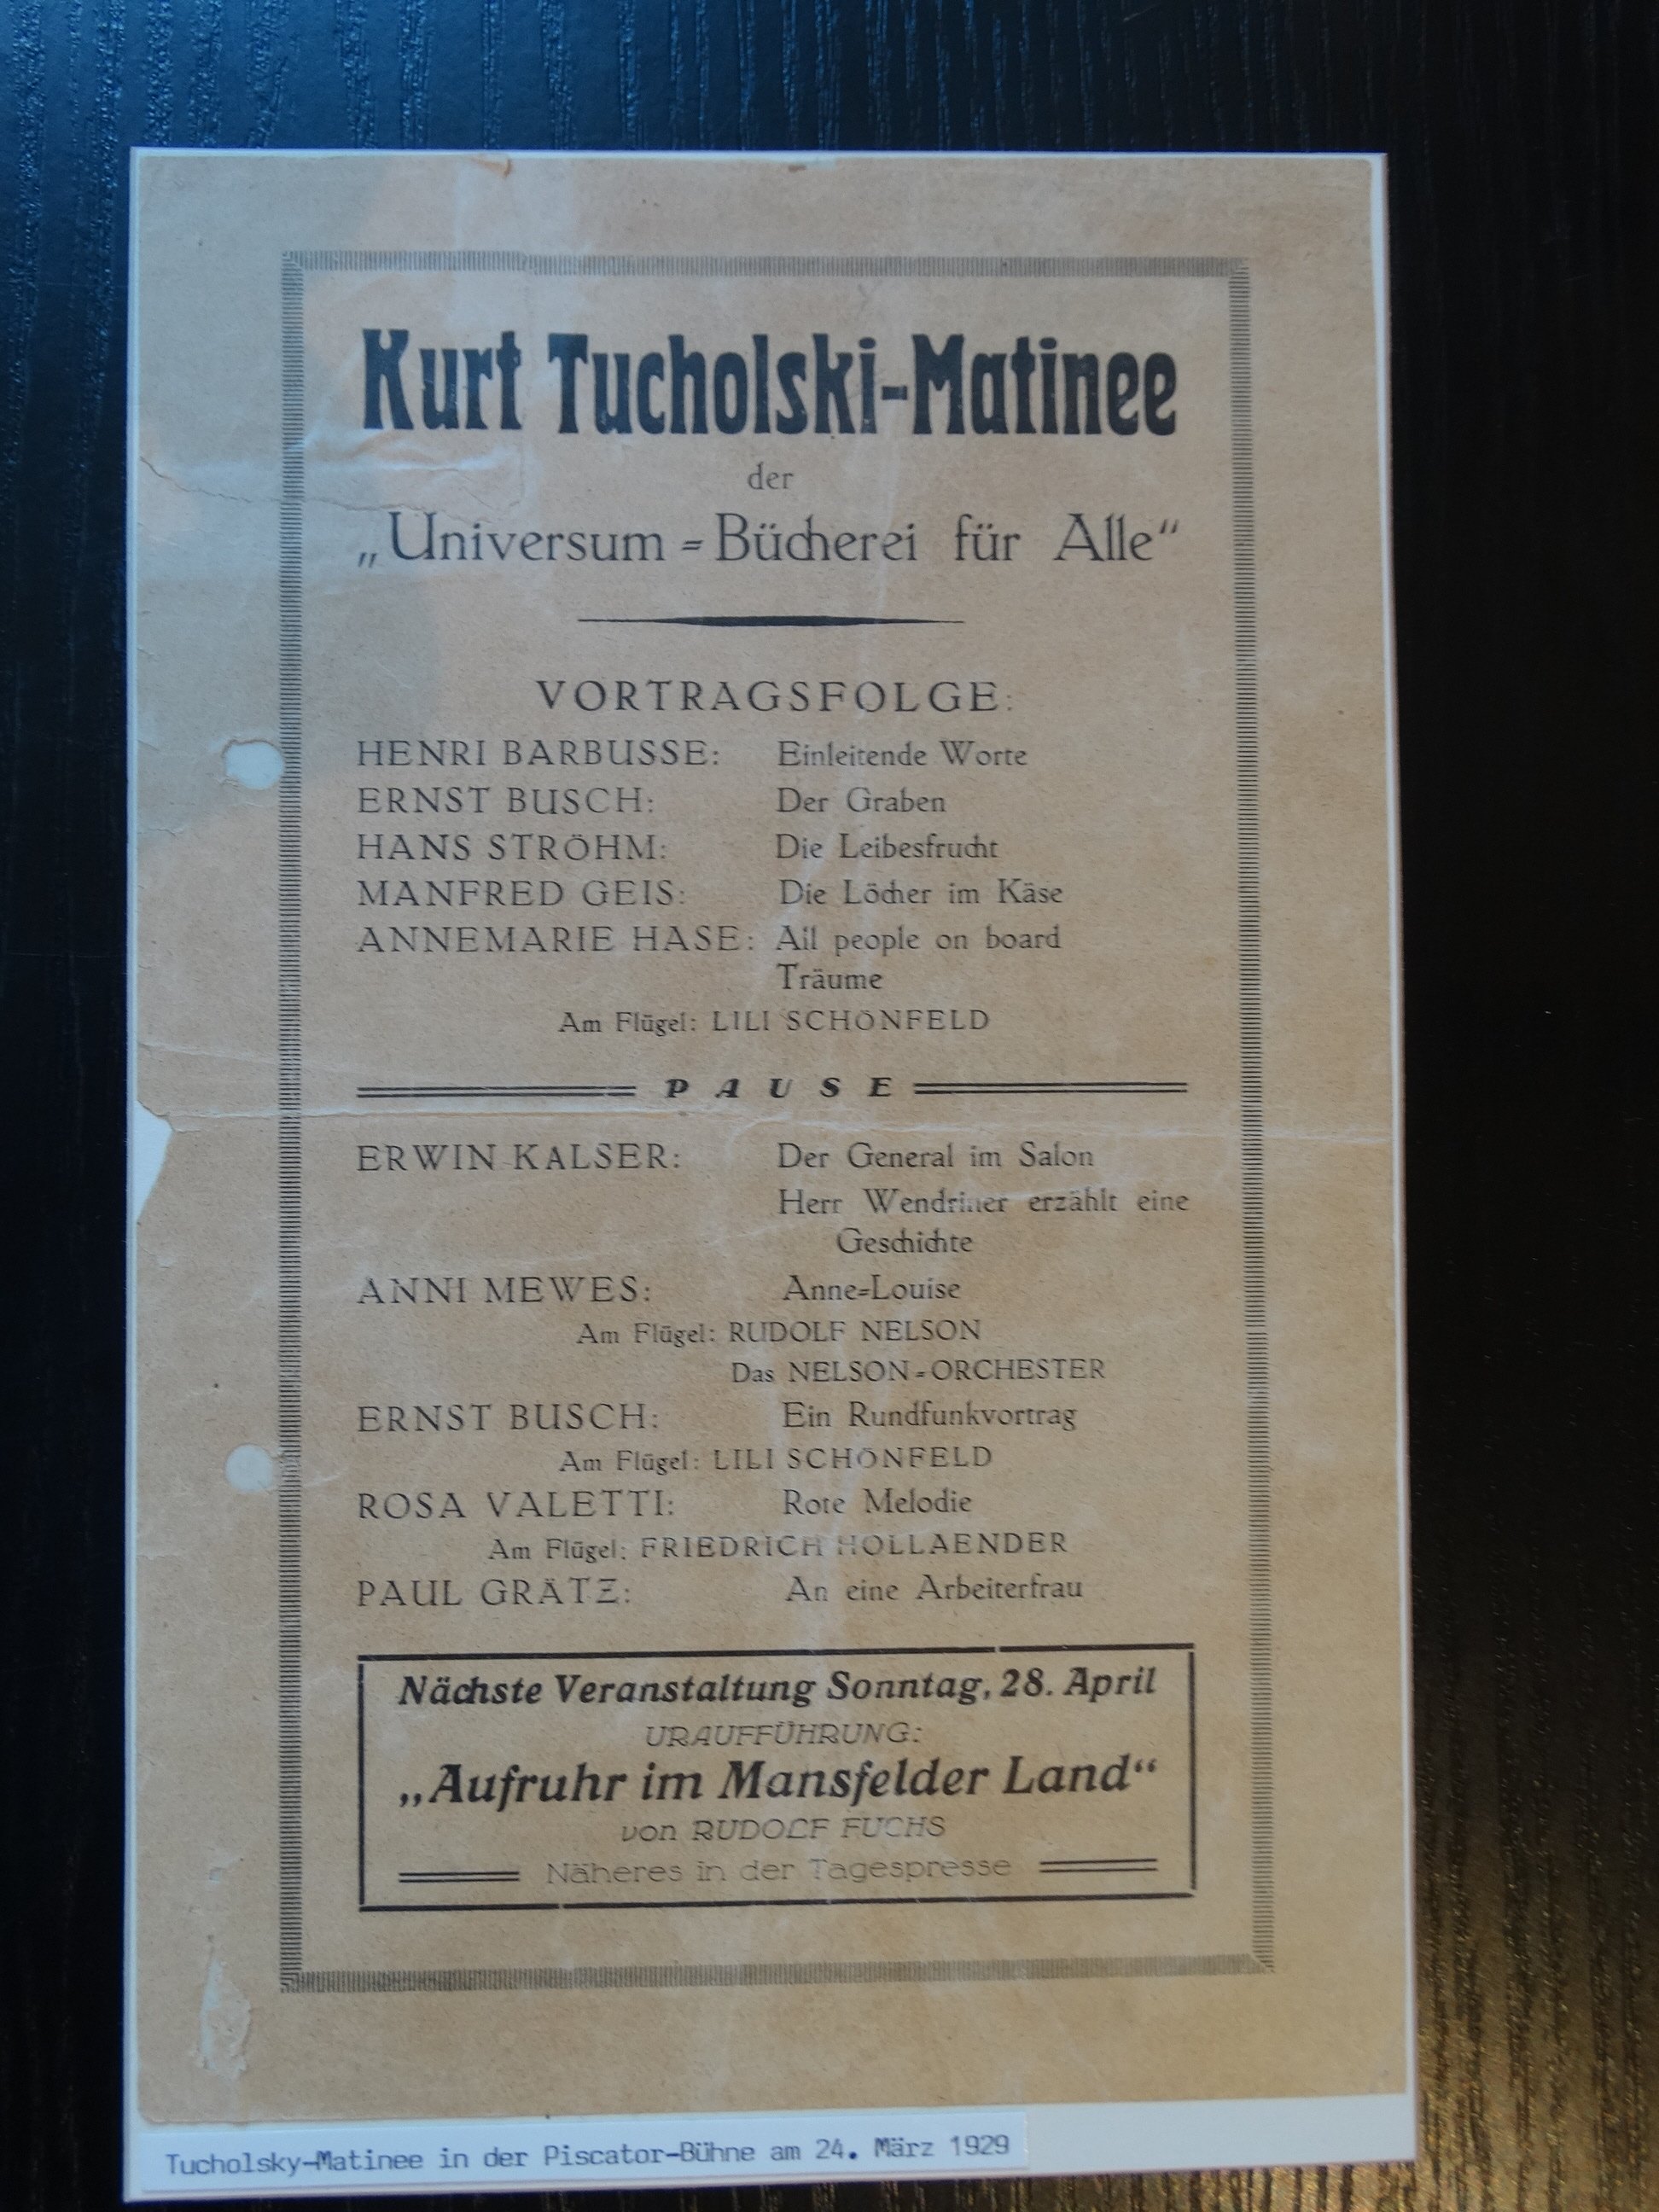 Tucholsky Matinee 1929 (Kurt Tucholsky Literaturmuseum CC BY-NC-SA)